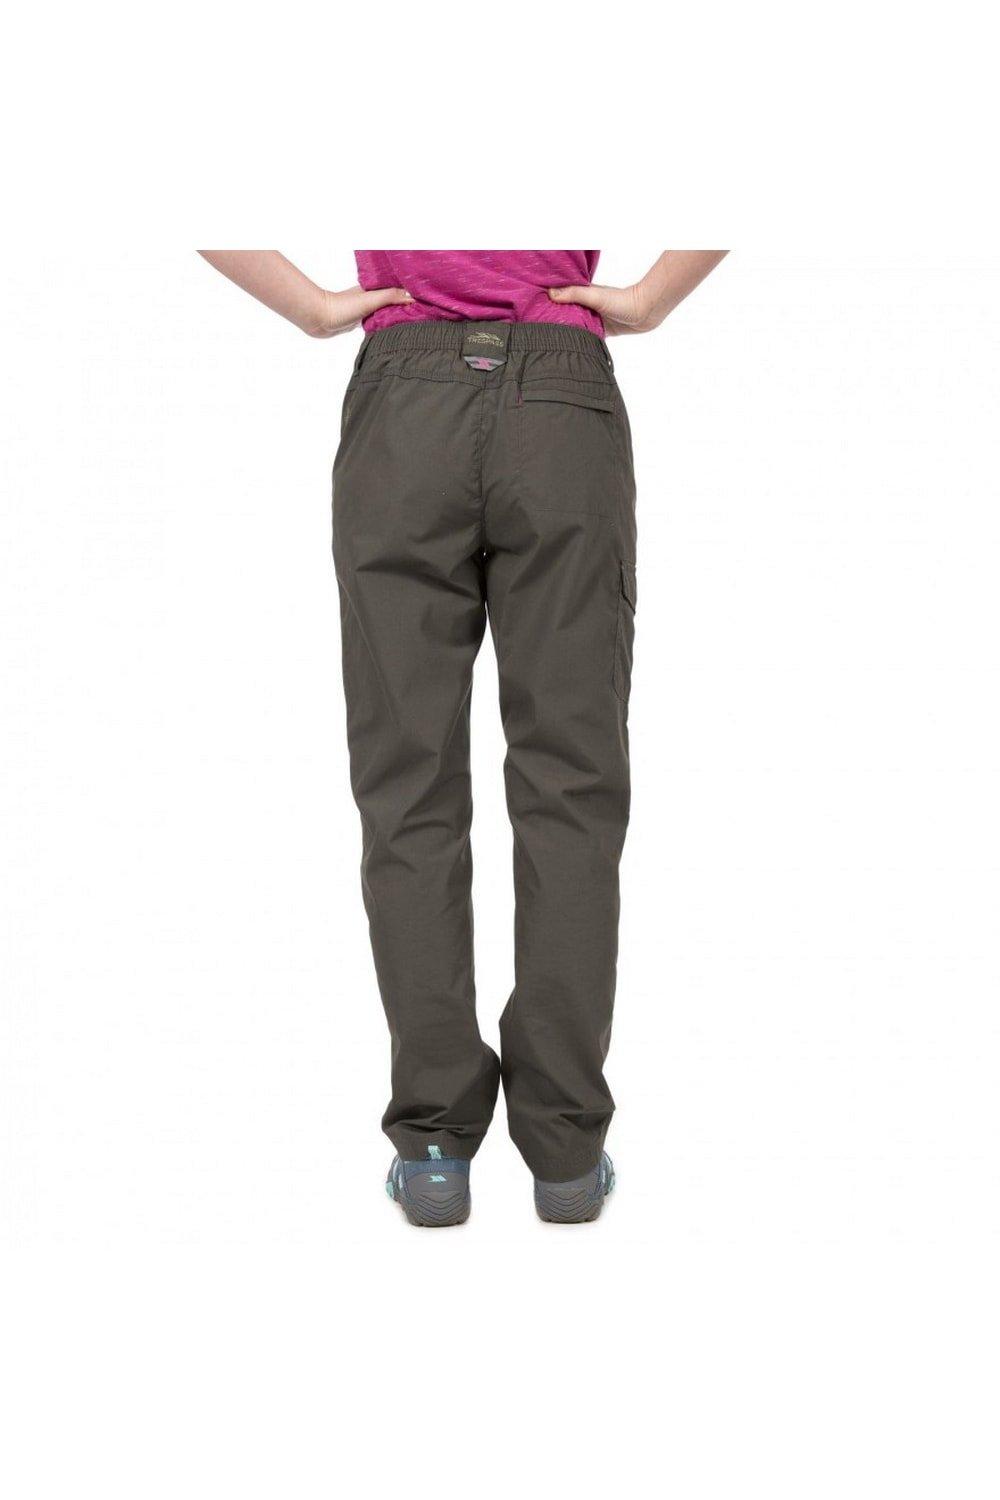 Trespass Hiking Pants Passcode - Male Trousers Fiber India | Ubuy